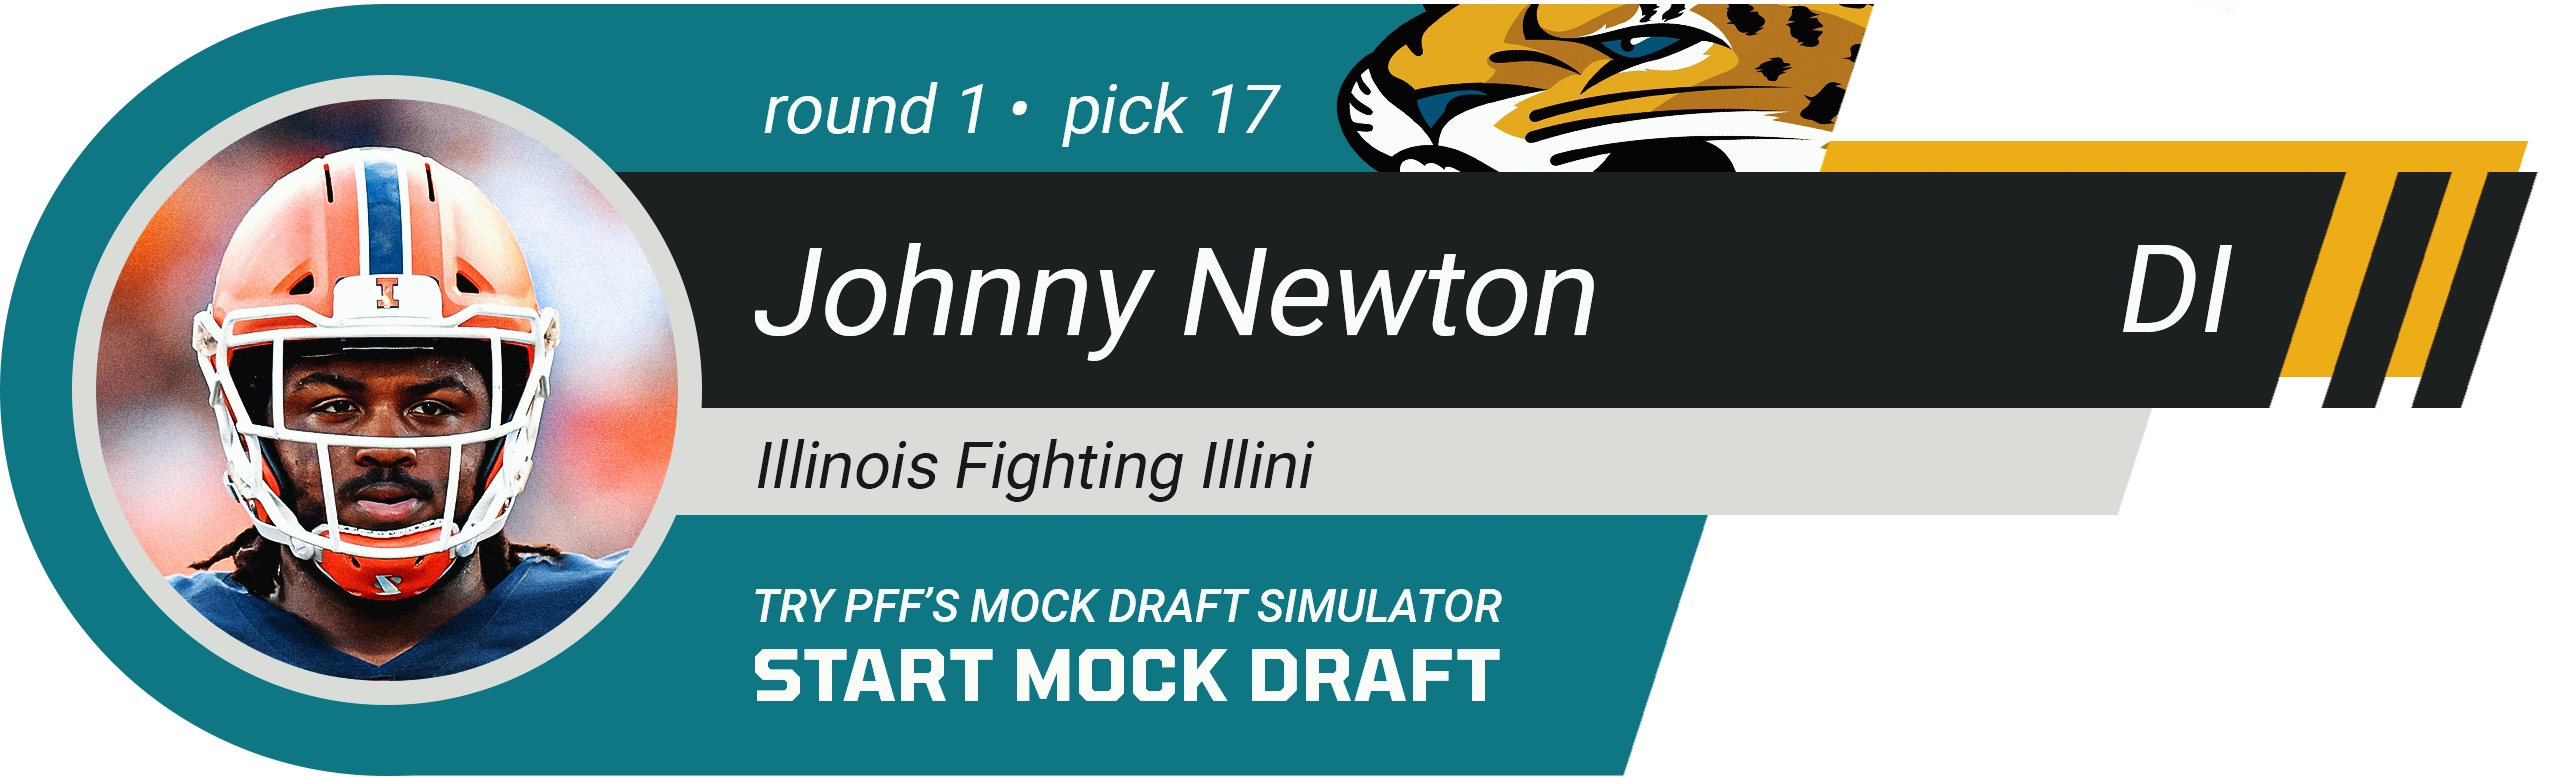 17. Jacksonville Jaguars: DI Johnny Newton, Illinois